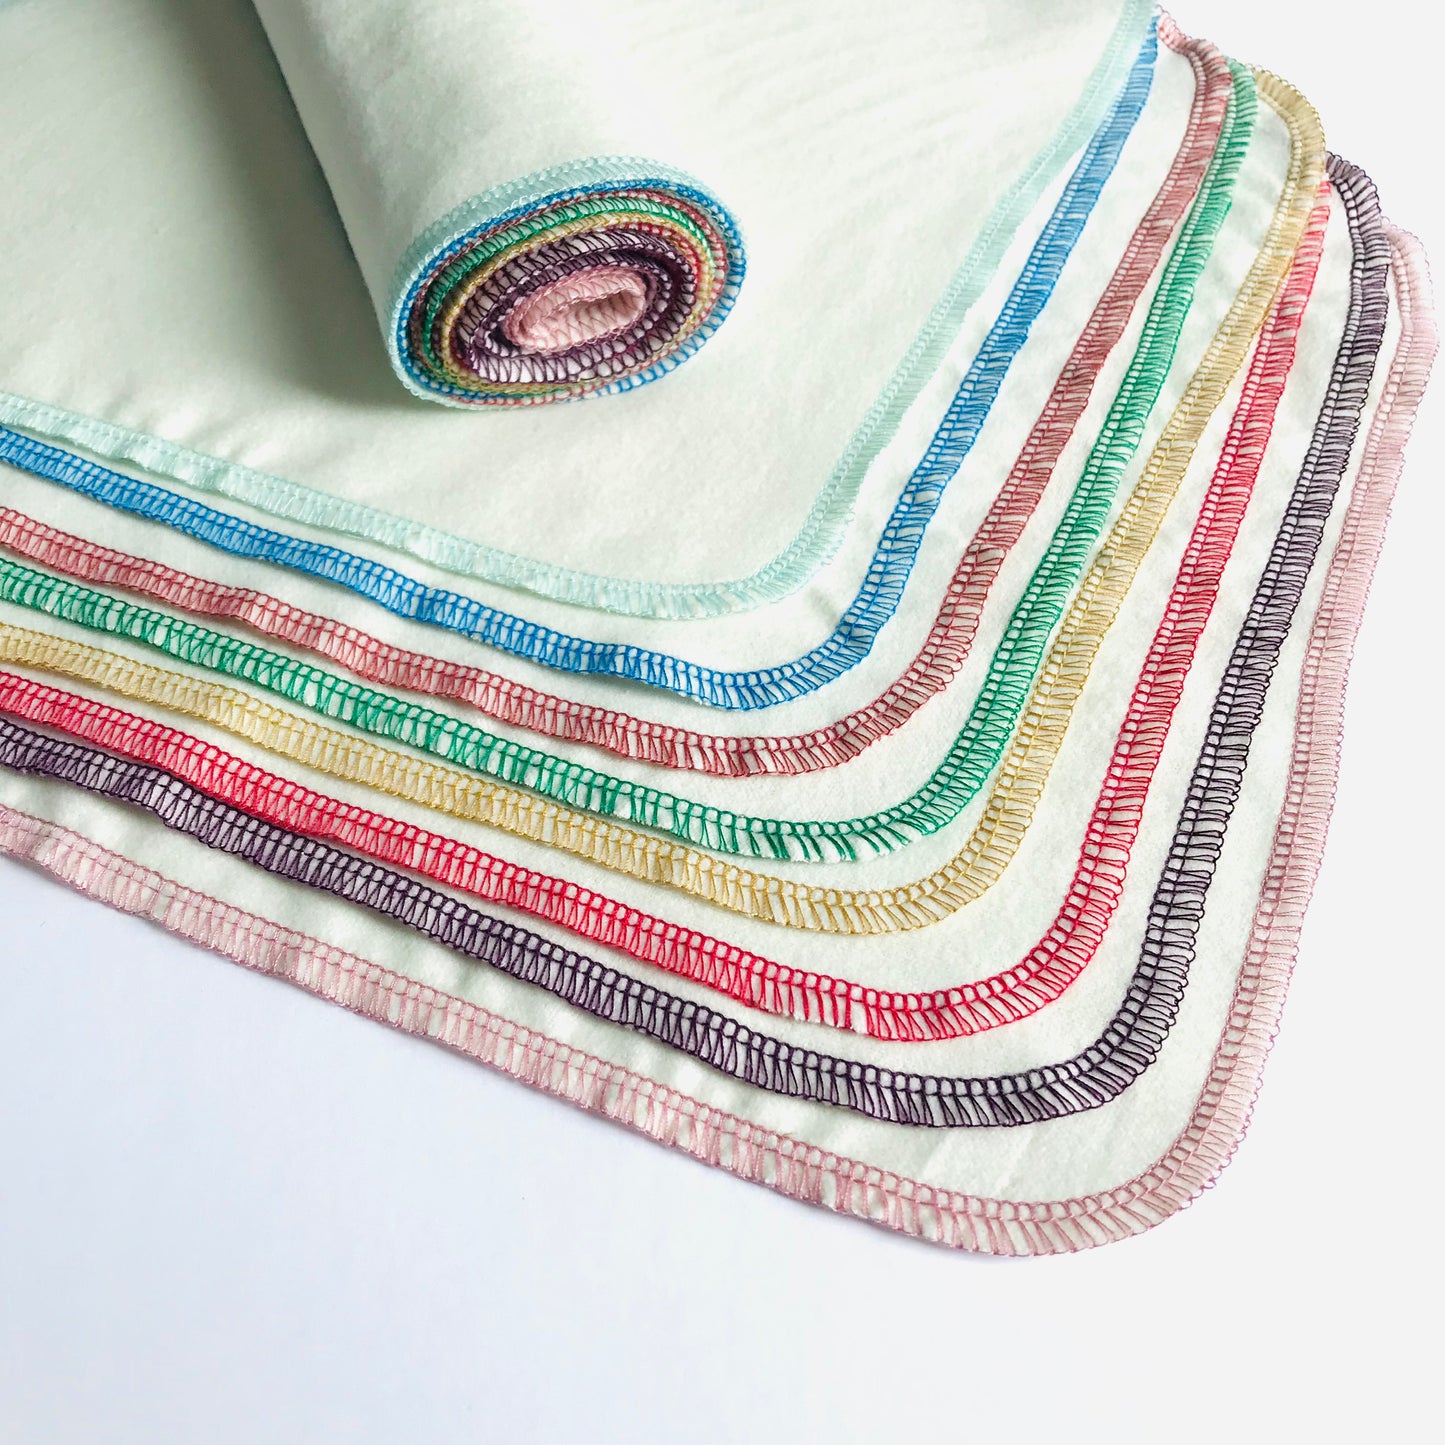 1 layer Rainbow Unpaper towel 100% Cotton